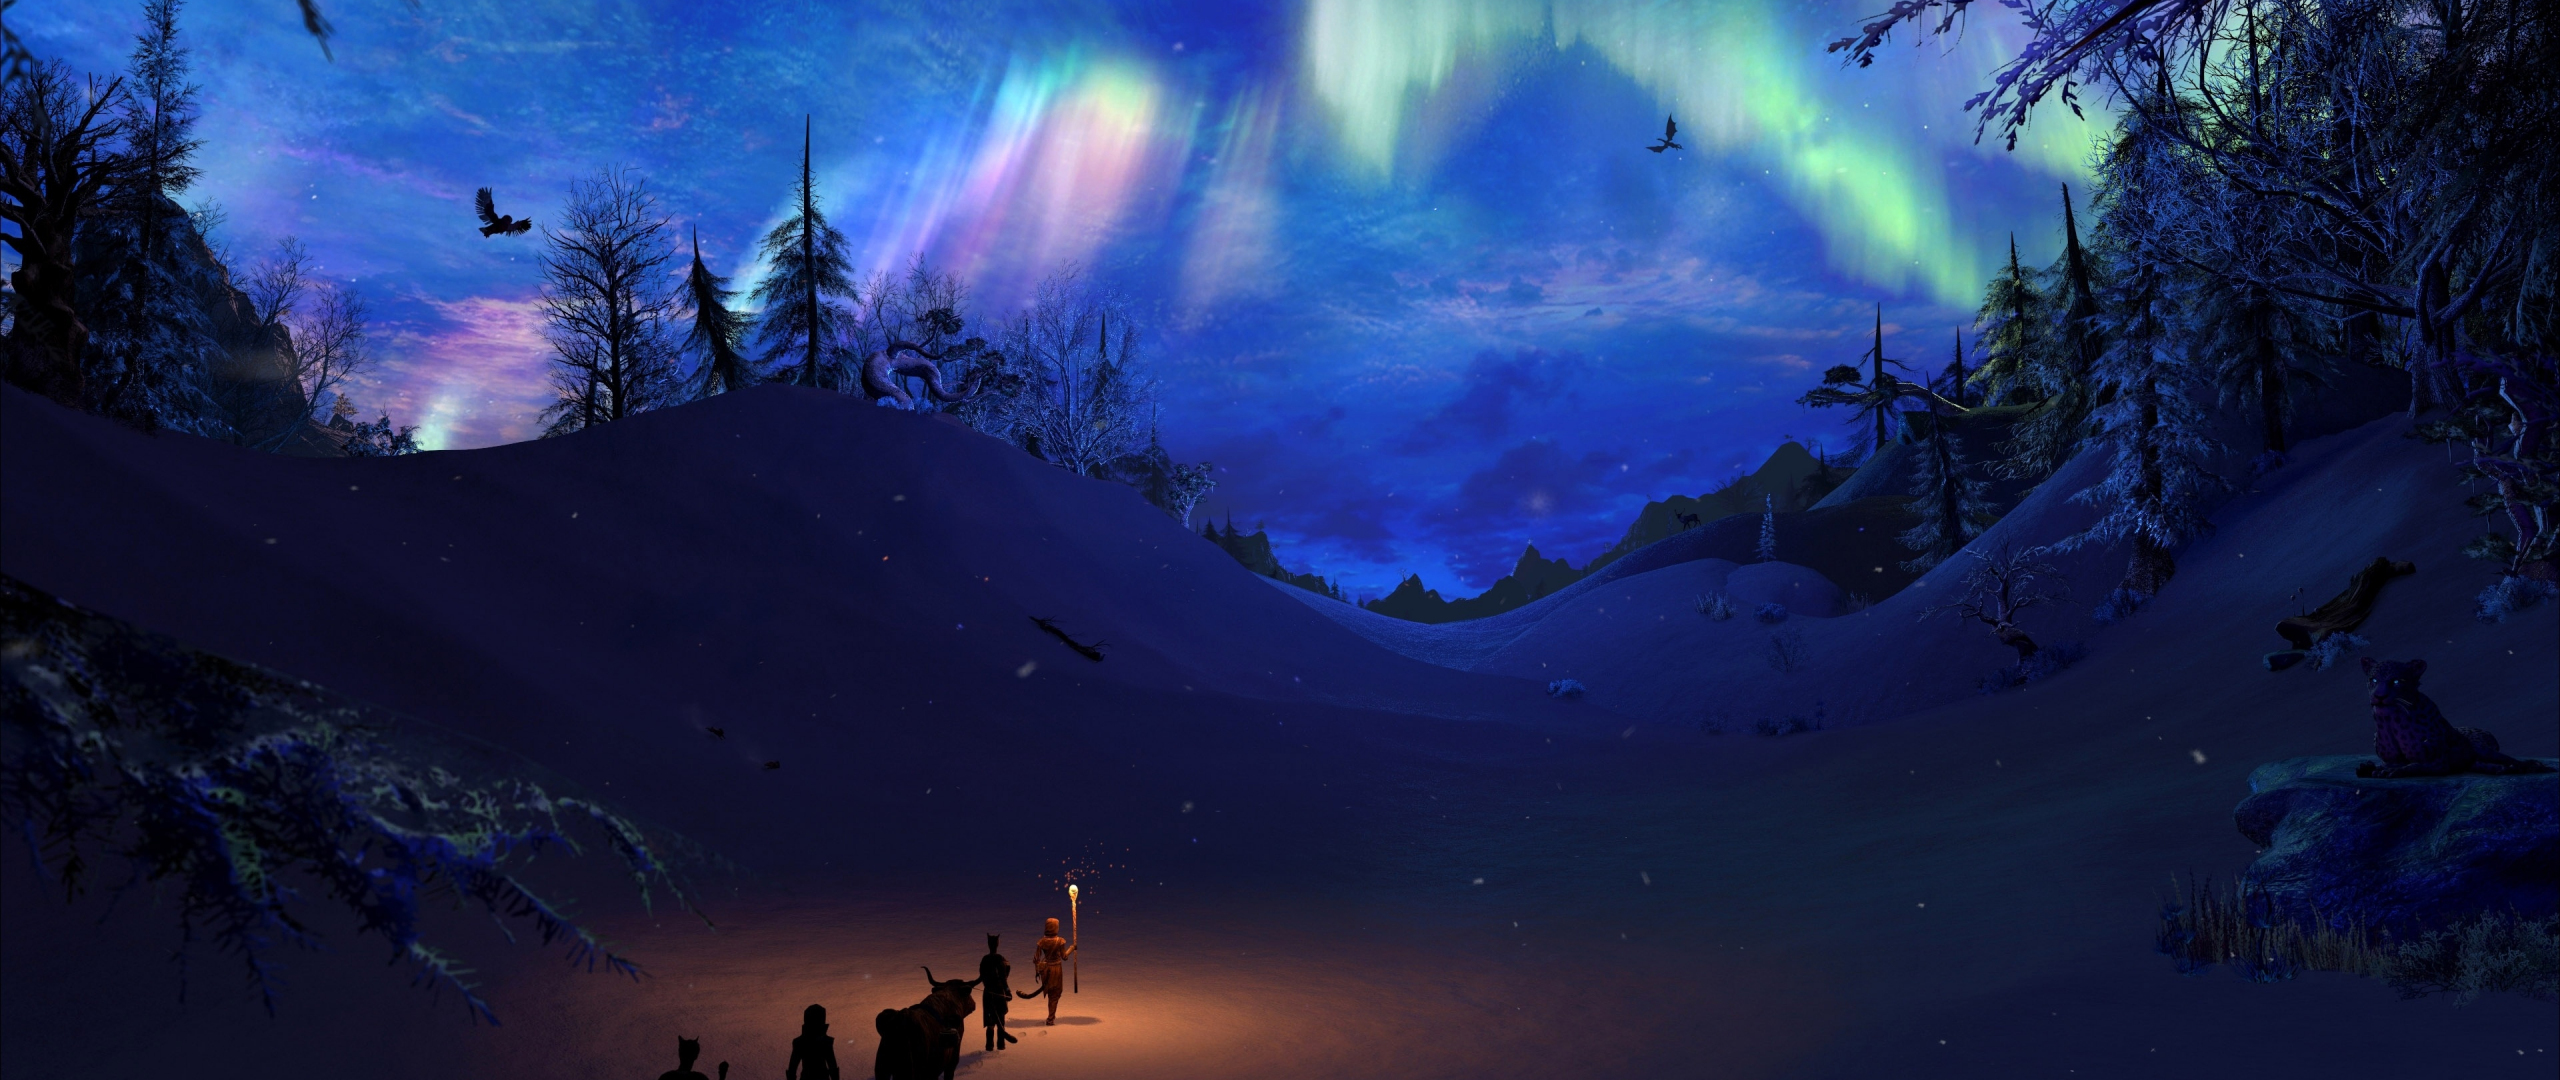 Download 2560x1080 Wallpaper Northern Lights Landscape The Elder Scrolls V Skyrim Dual Wide Widescreen 2560x1080 Hd Image Background